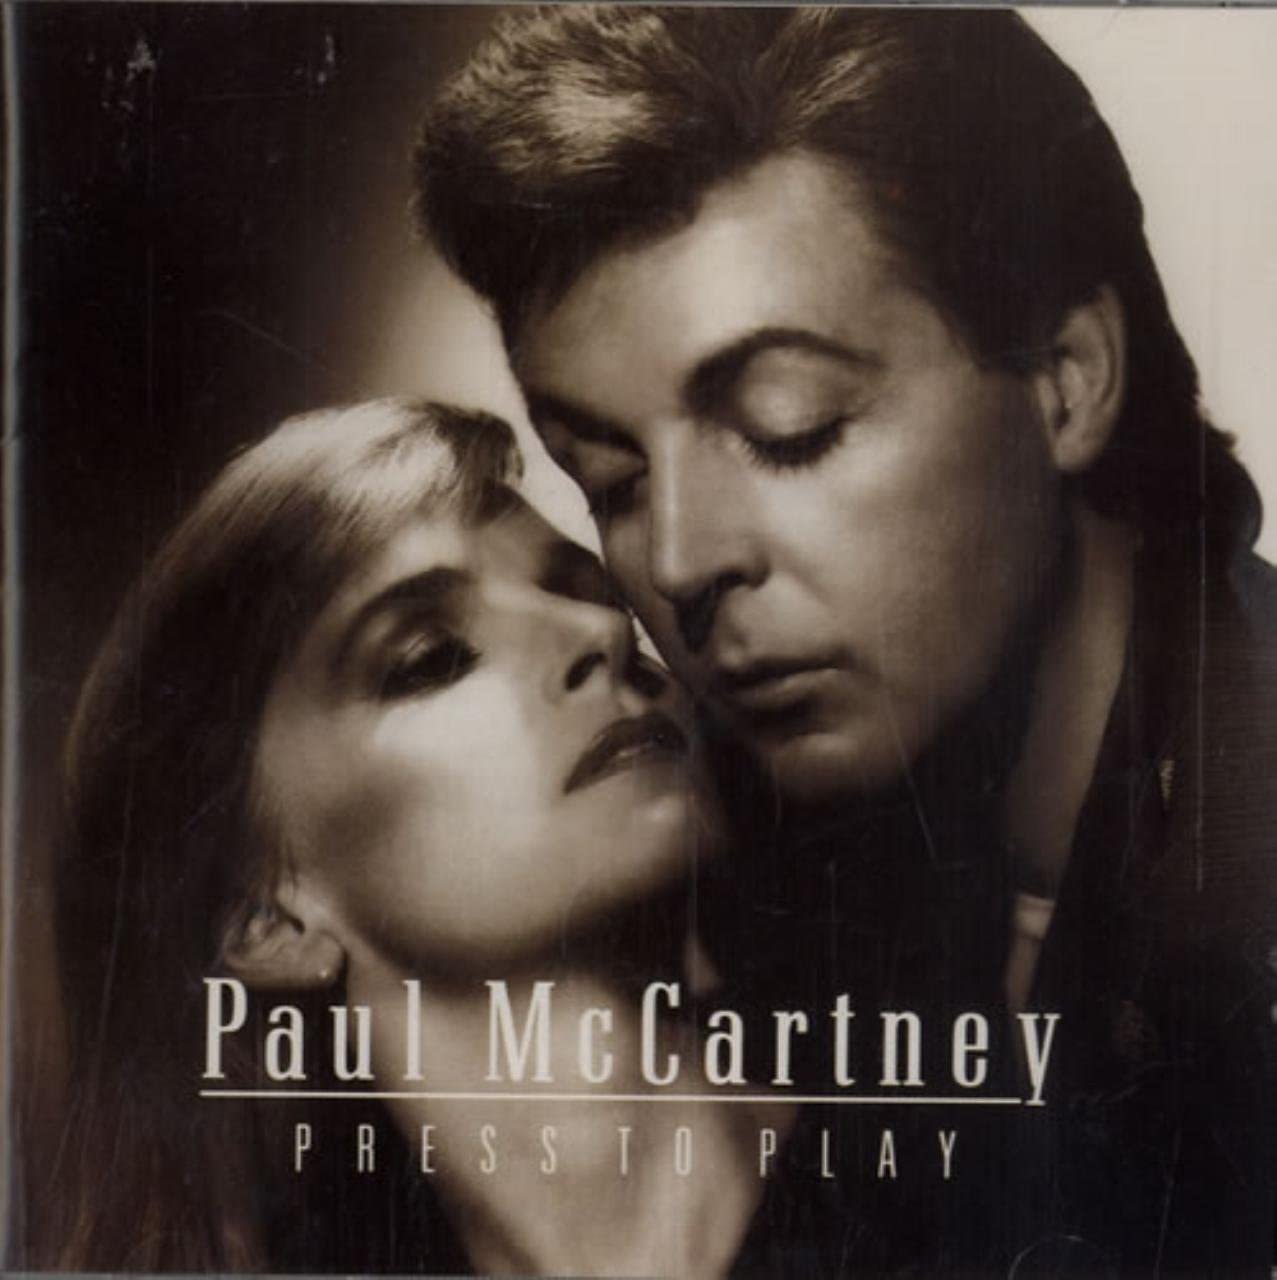 Press to Play by Paul McCartney